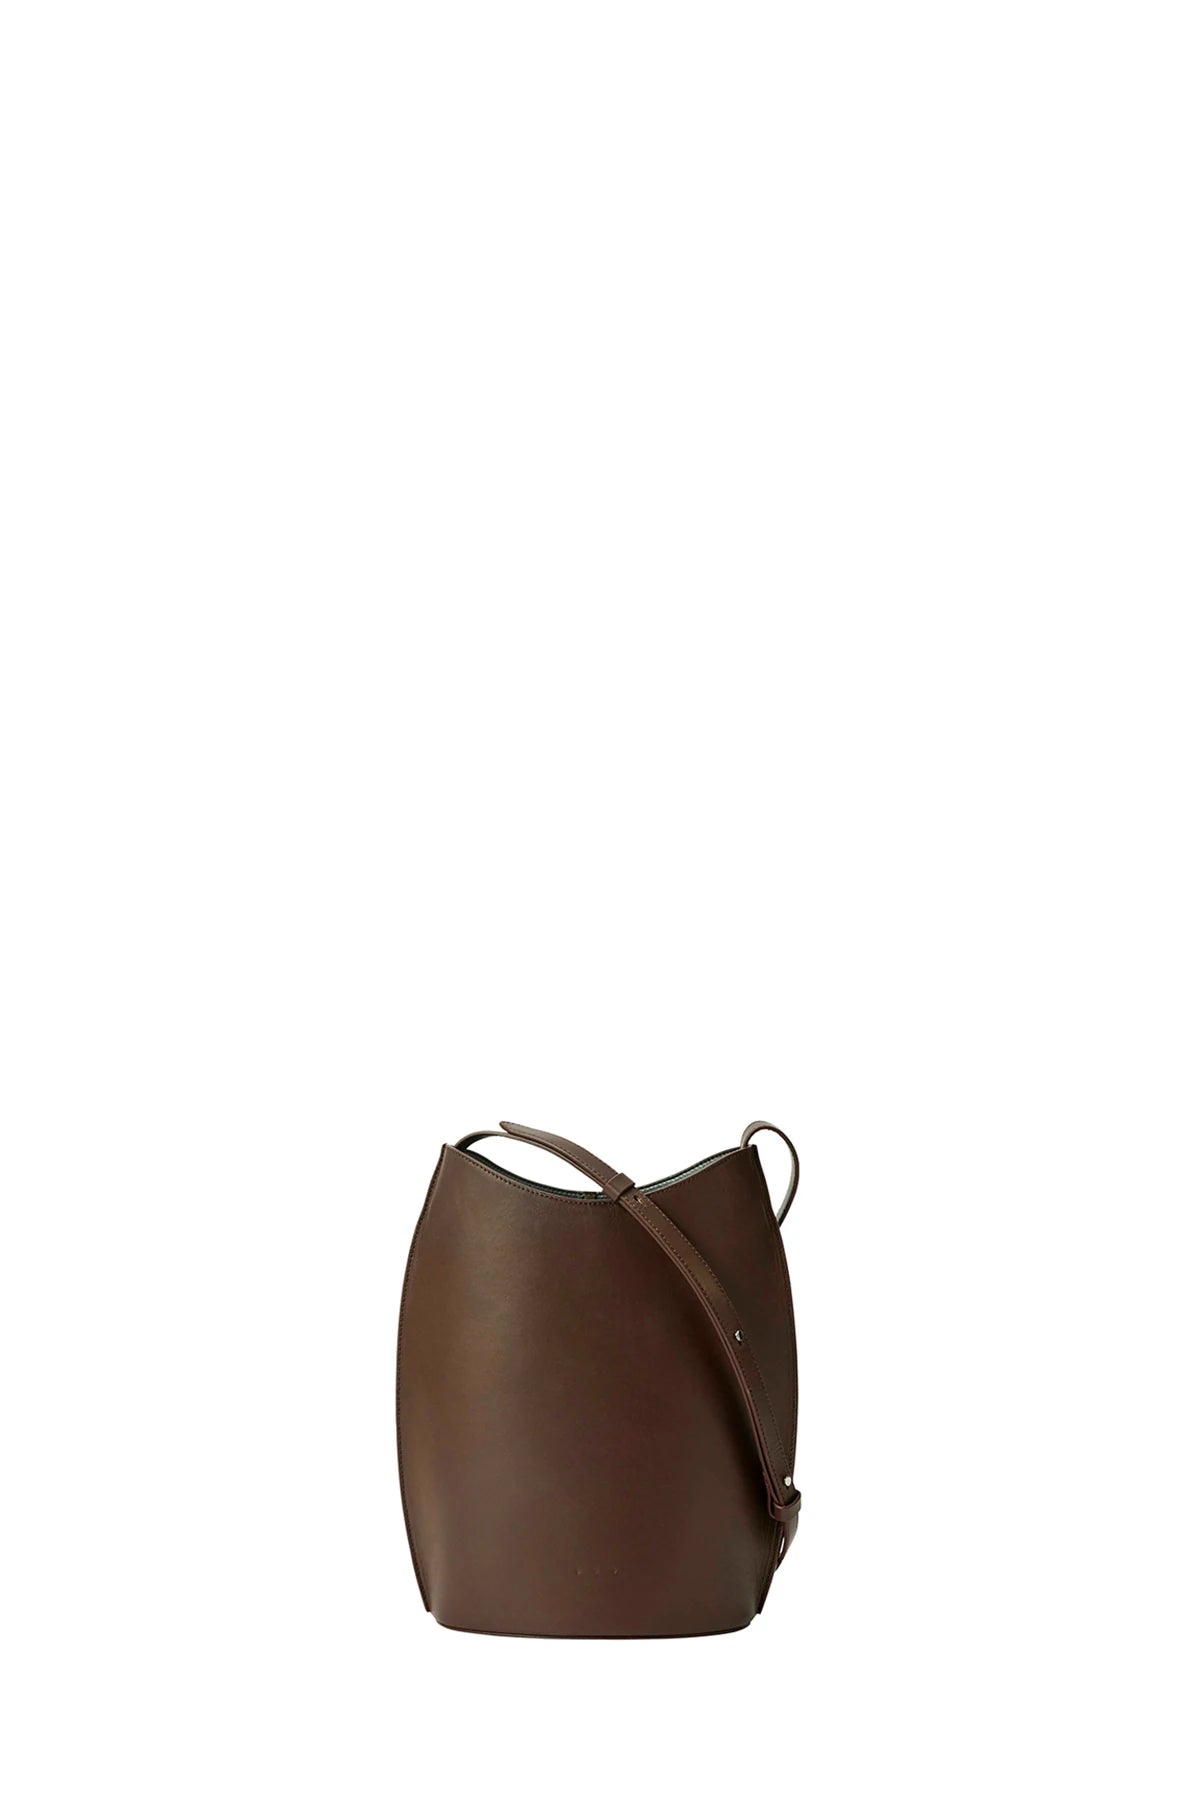 AESTHER EKME Sac Ovale Smooth Leather Shoulder Bag